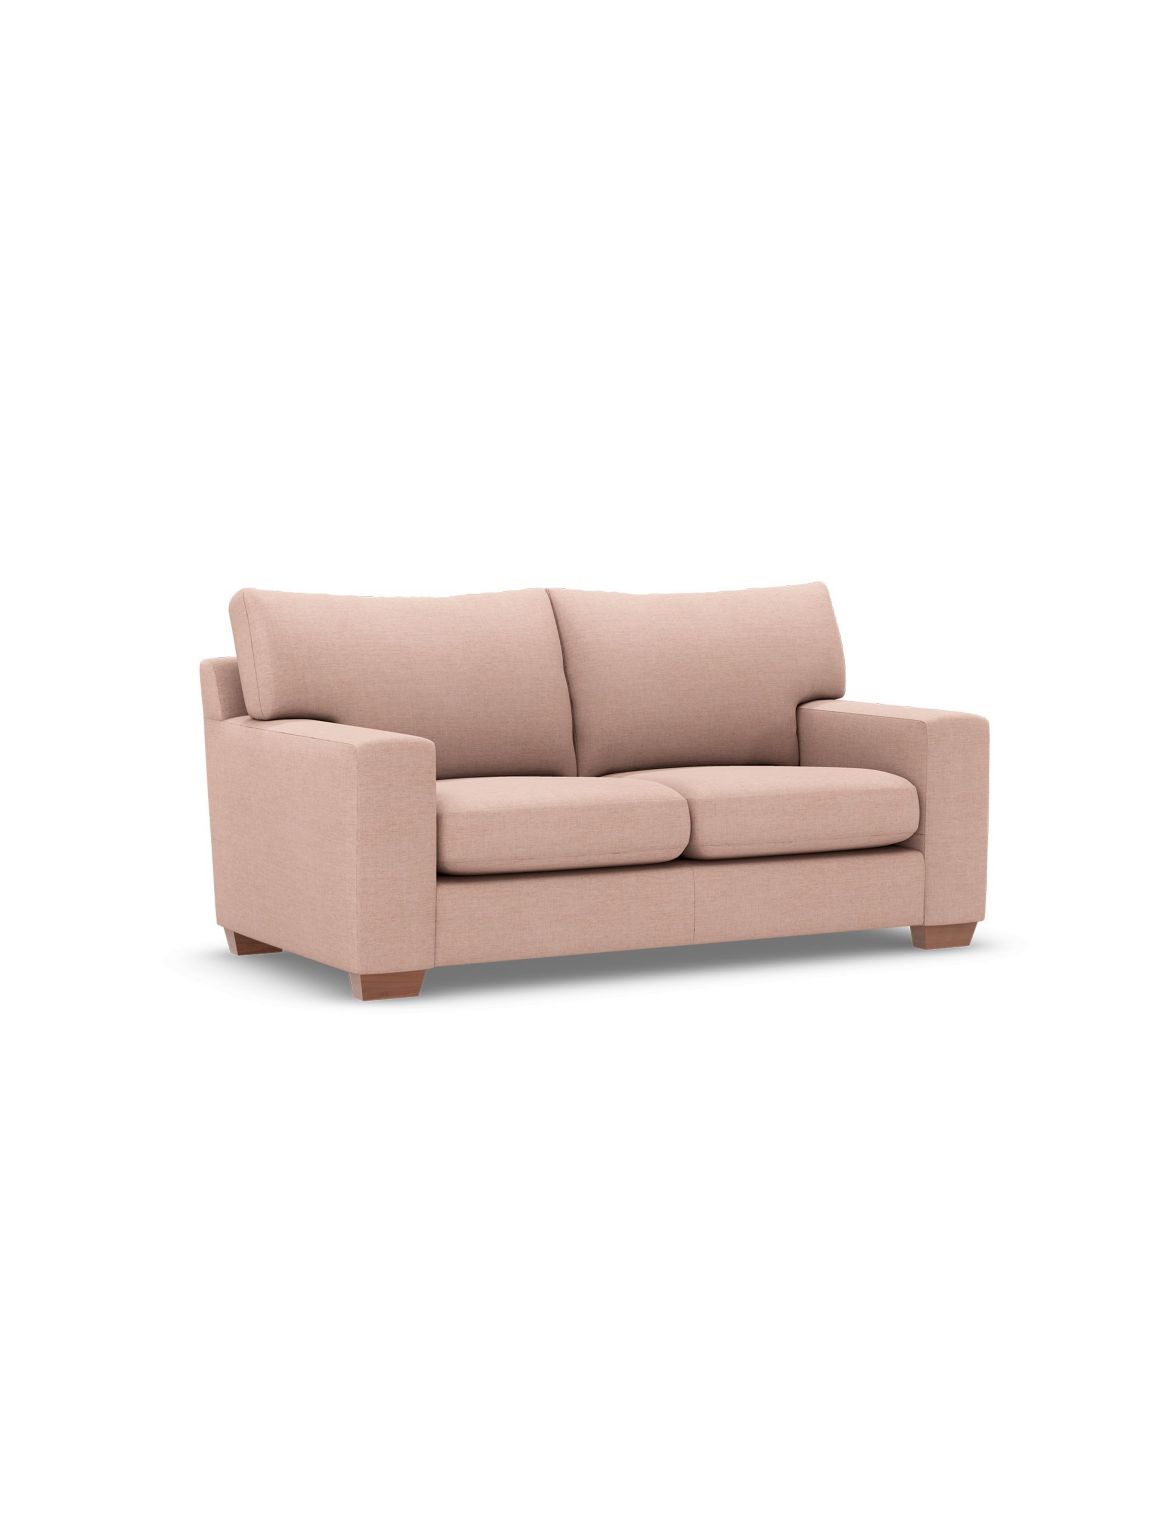 Alfie Small Sofa pink